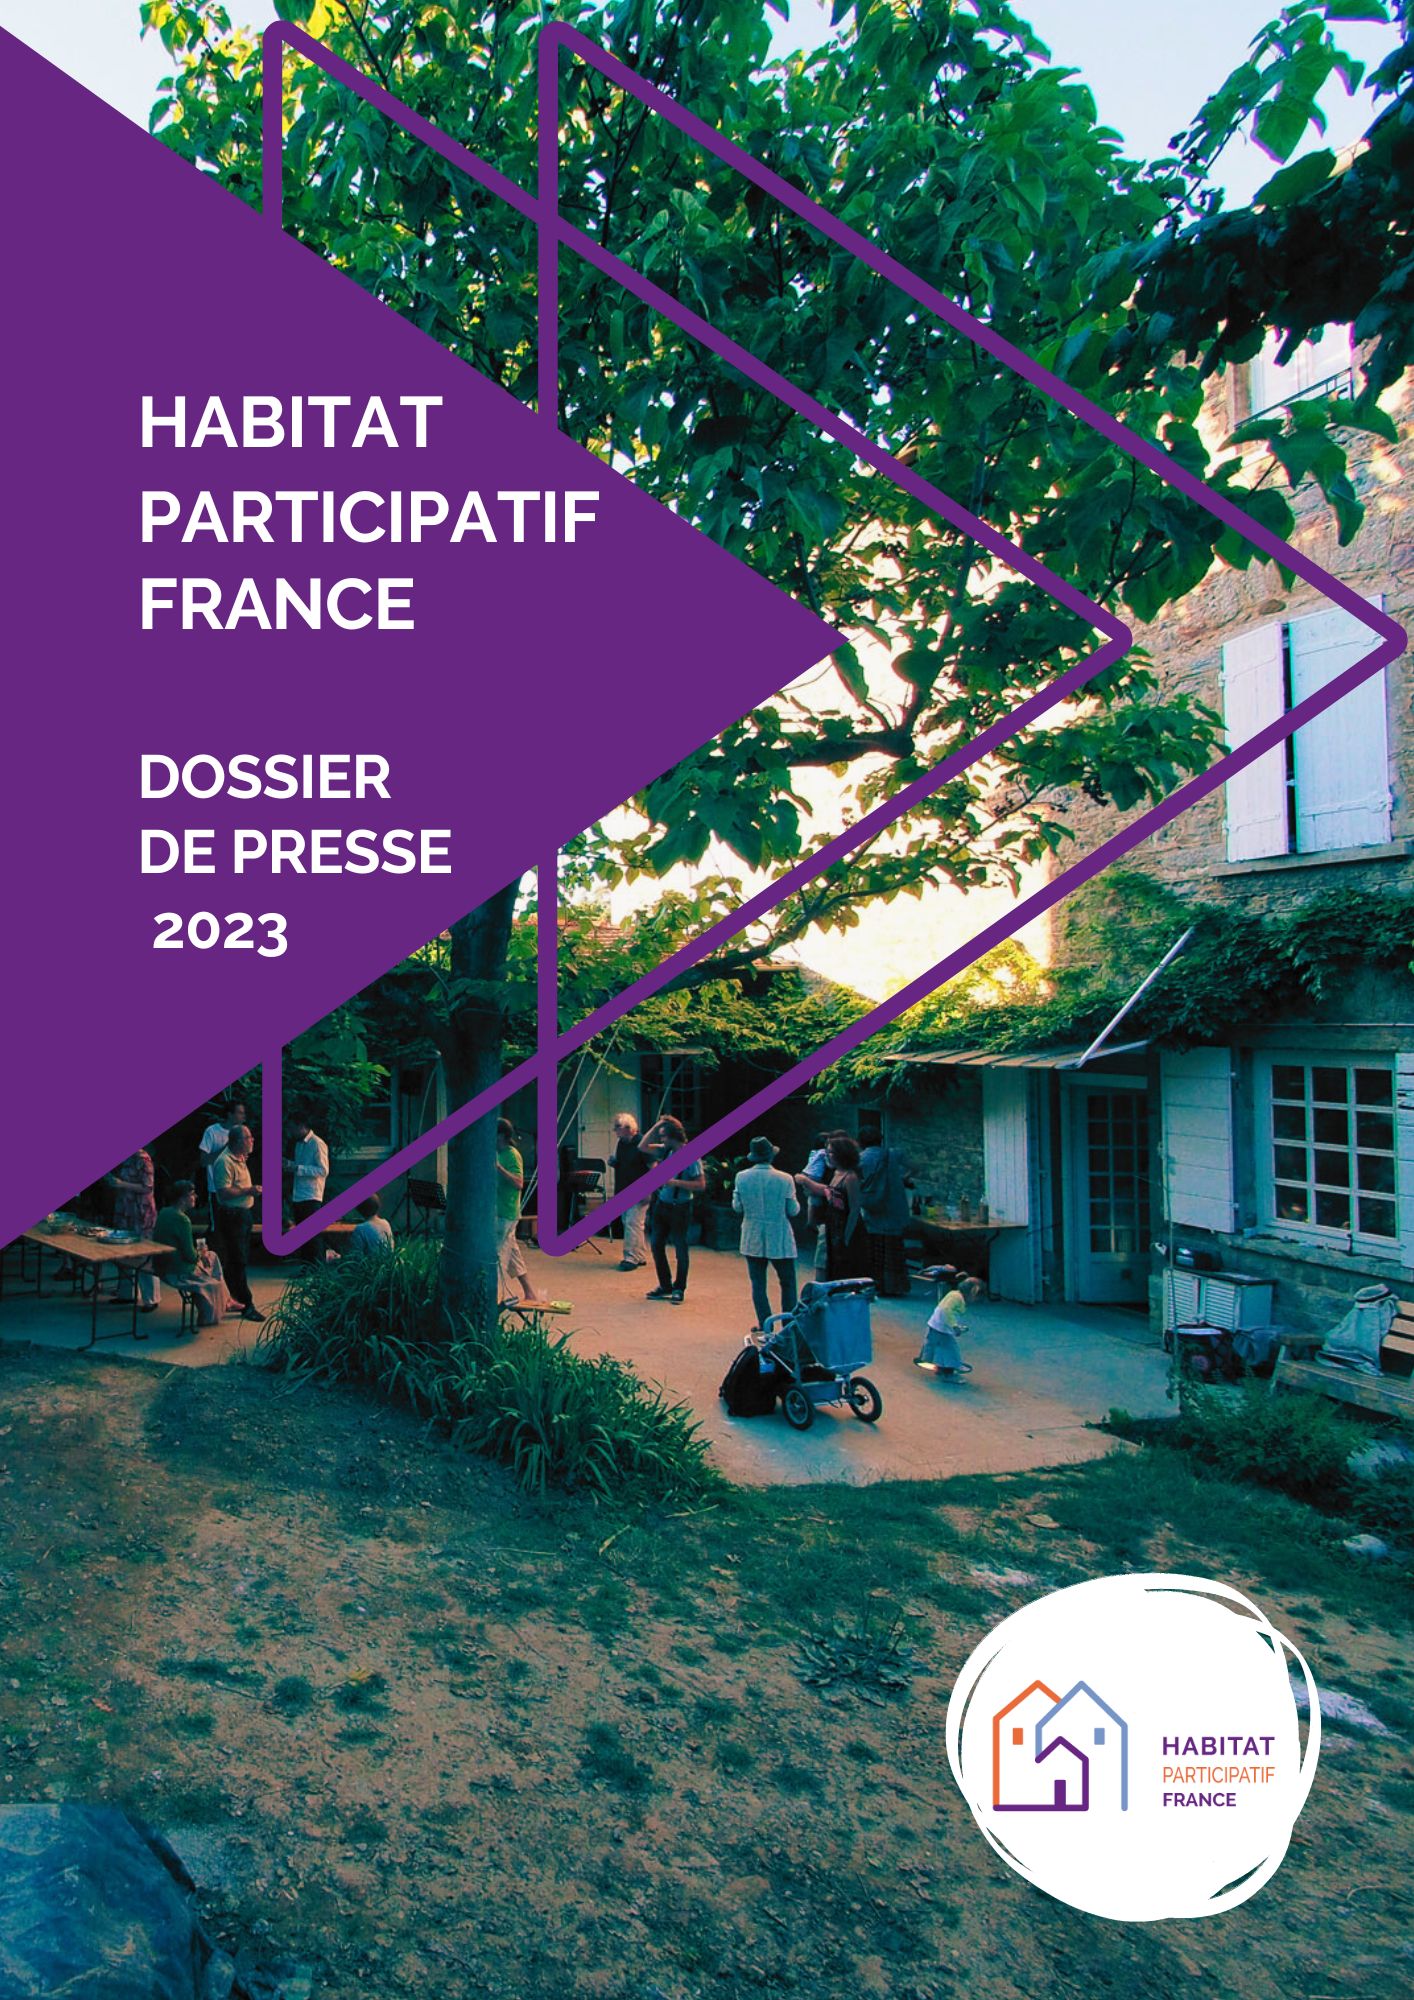 Dossier de presse Habitat Participatif France 2023
Lien vers: https://www.habitatparticipatif-france.fr/?HPFPresse/download&file=Dossier_de_presse_HabitatParticipatifFrance_2023_BD.pdf